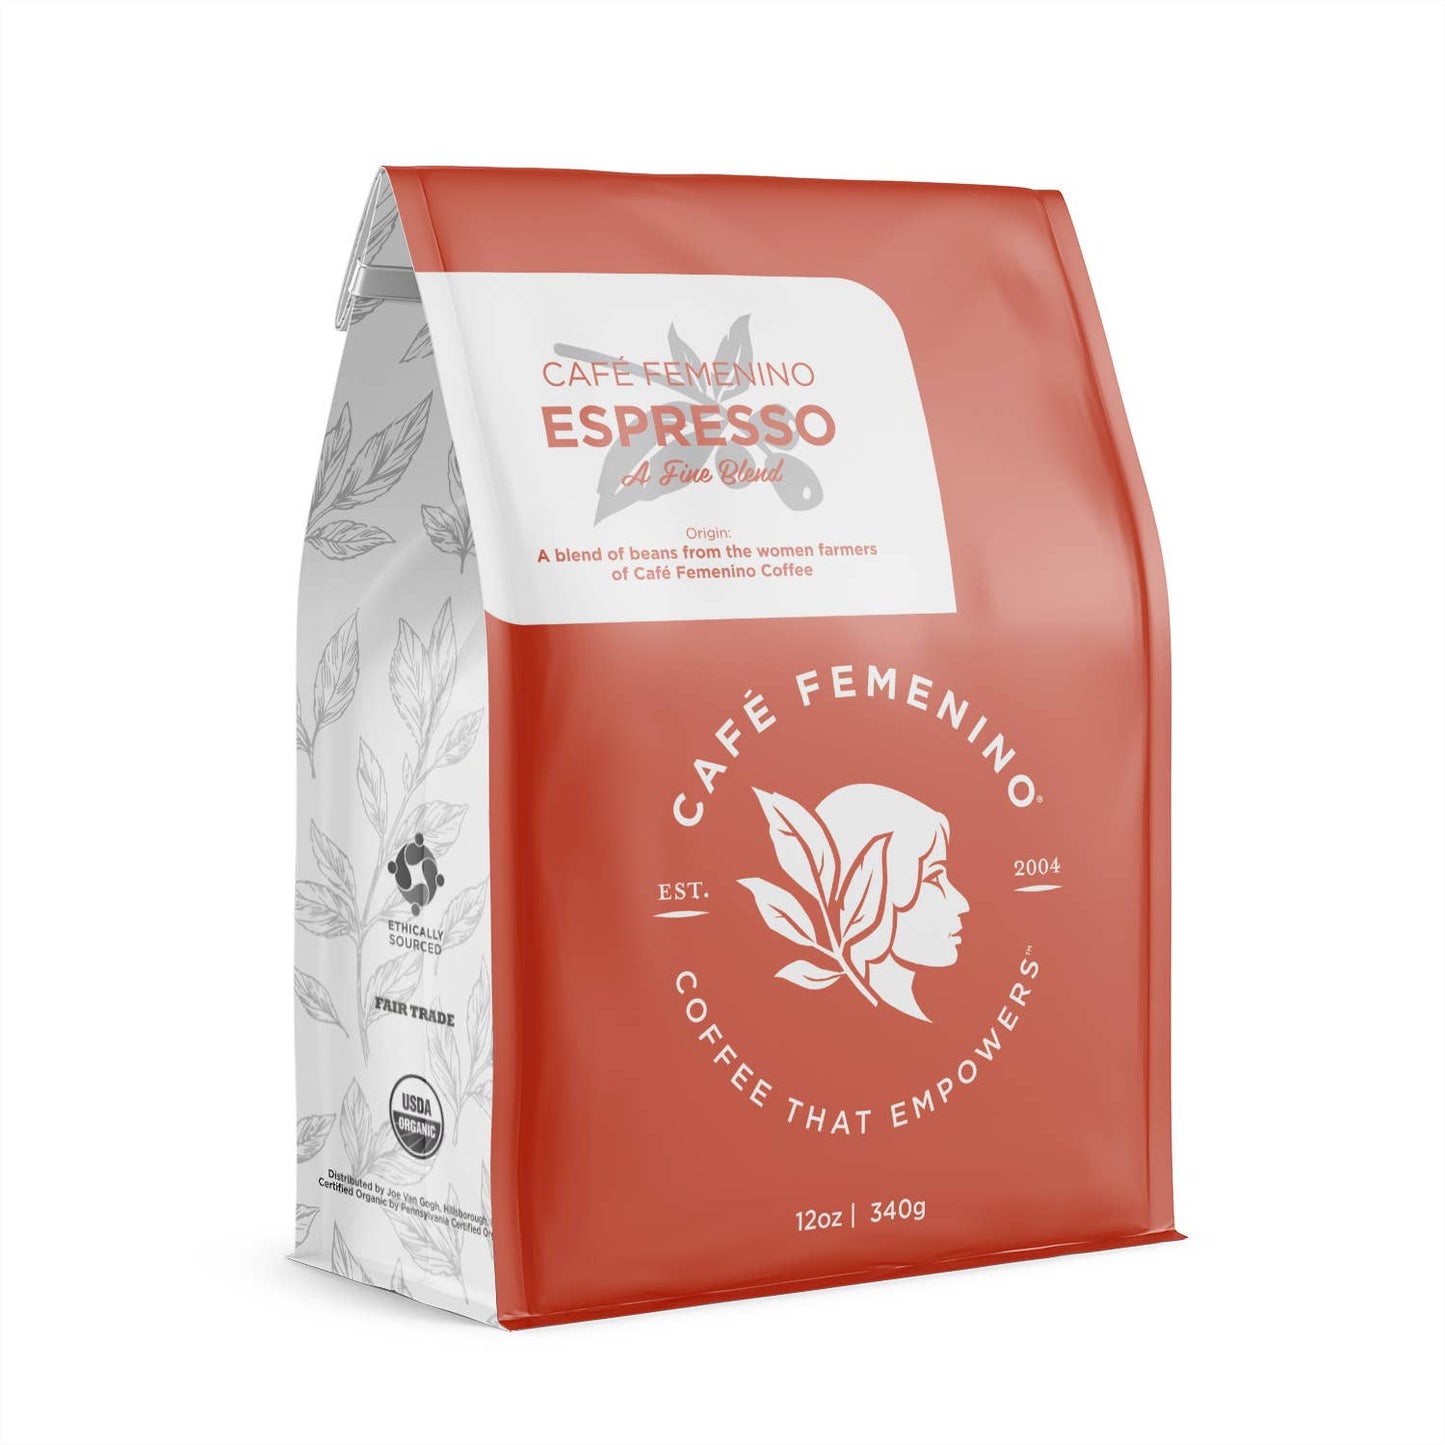 Cafe Femenino Coffee - Organic Fair Trade Espresso Whole Bean Coffee